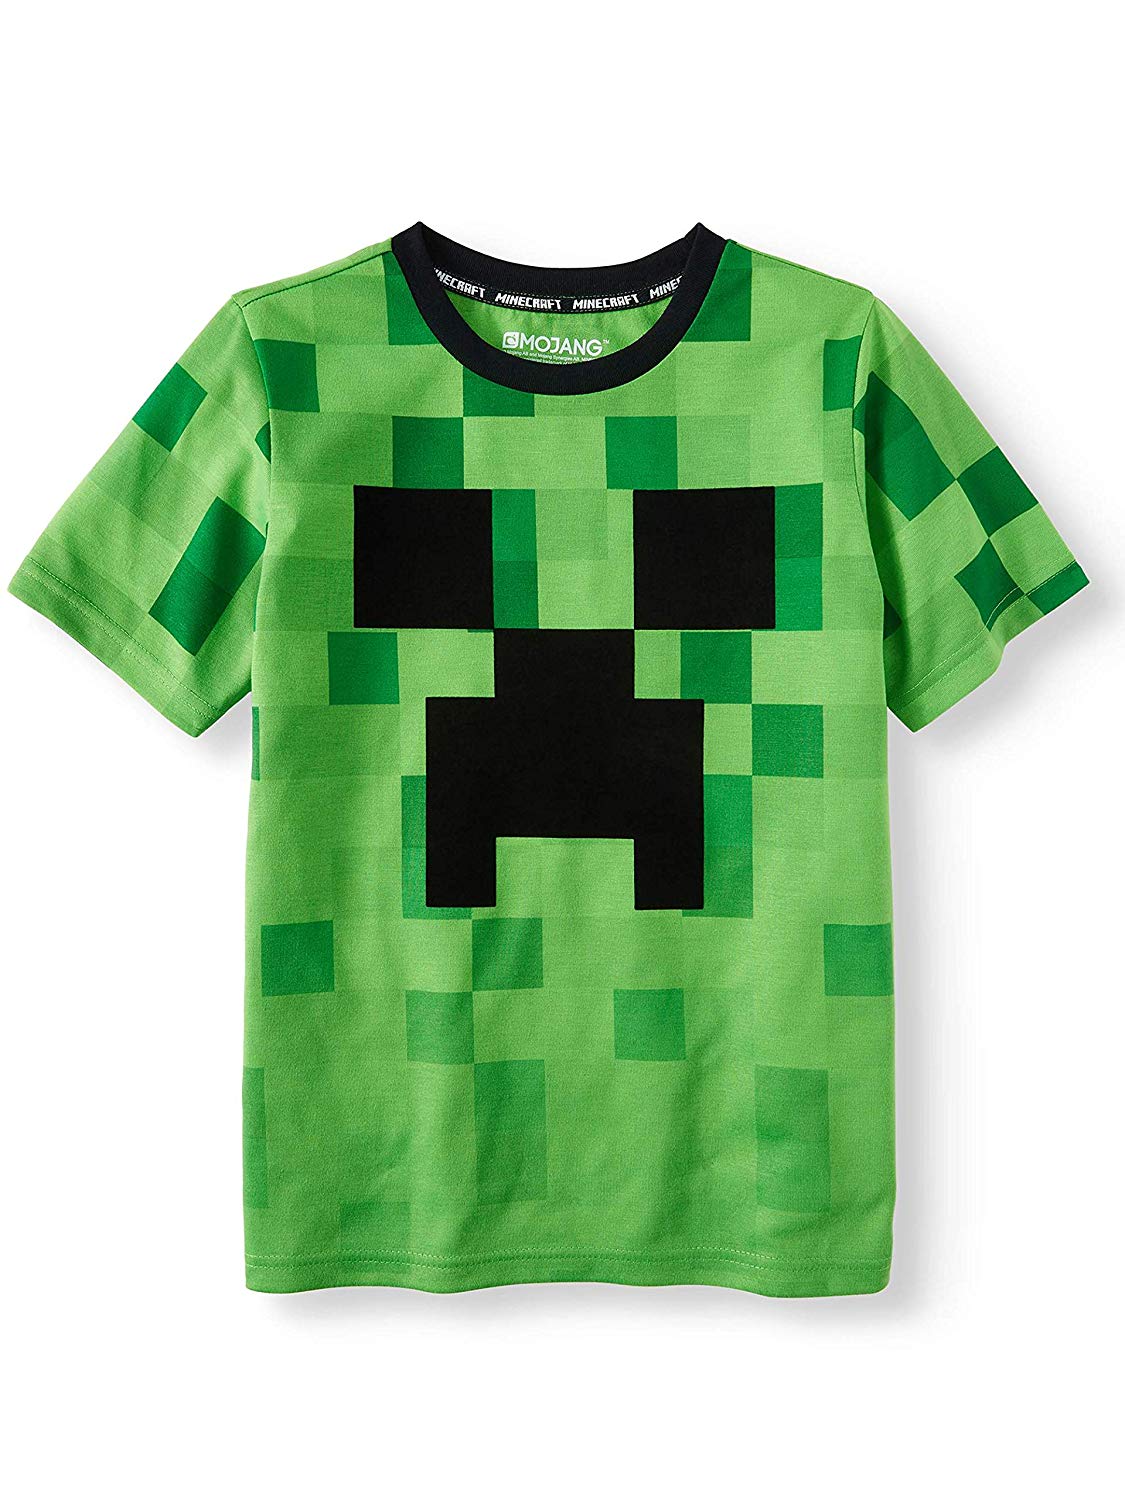 Micraft Logo - Minecraft Shirt Creeper Logo Fade Short Sleeve Licensed Tee Green